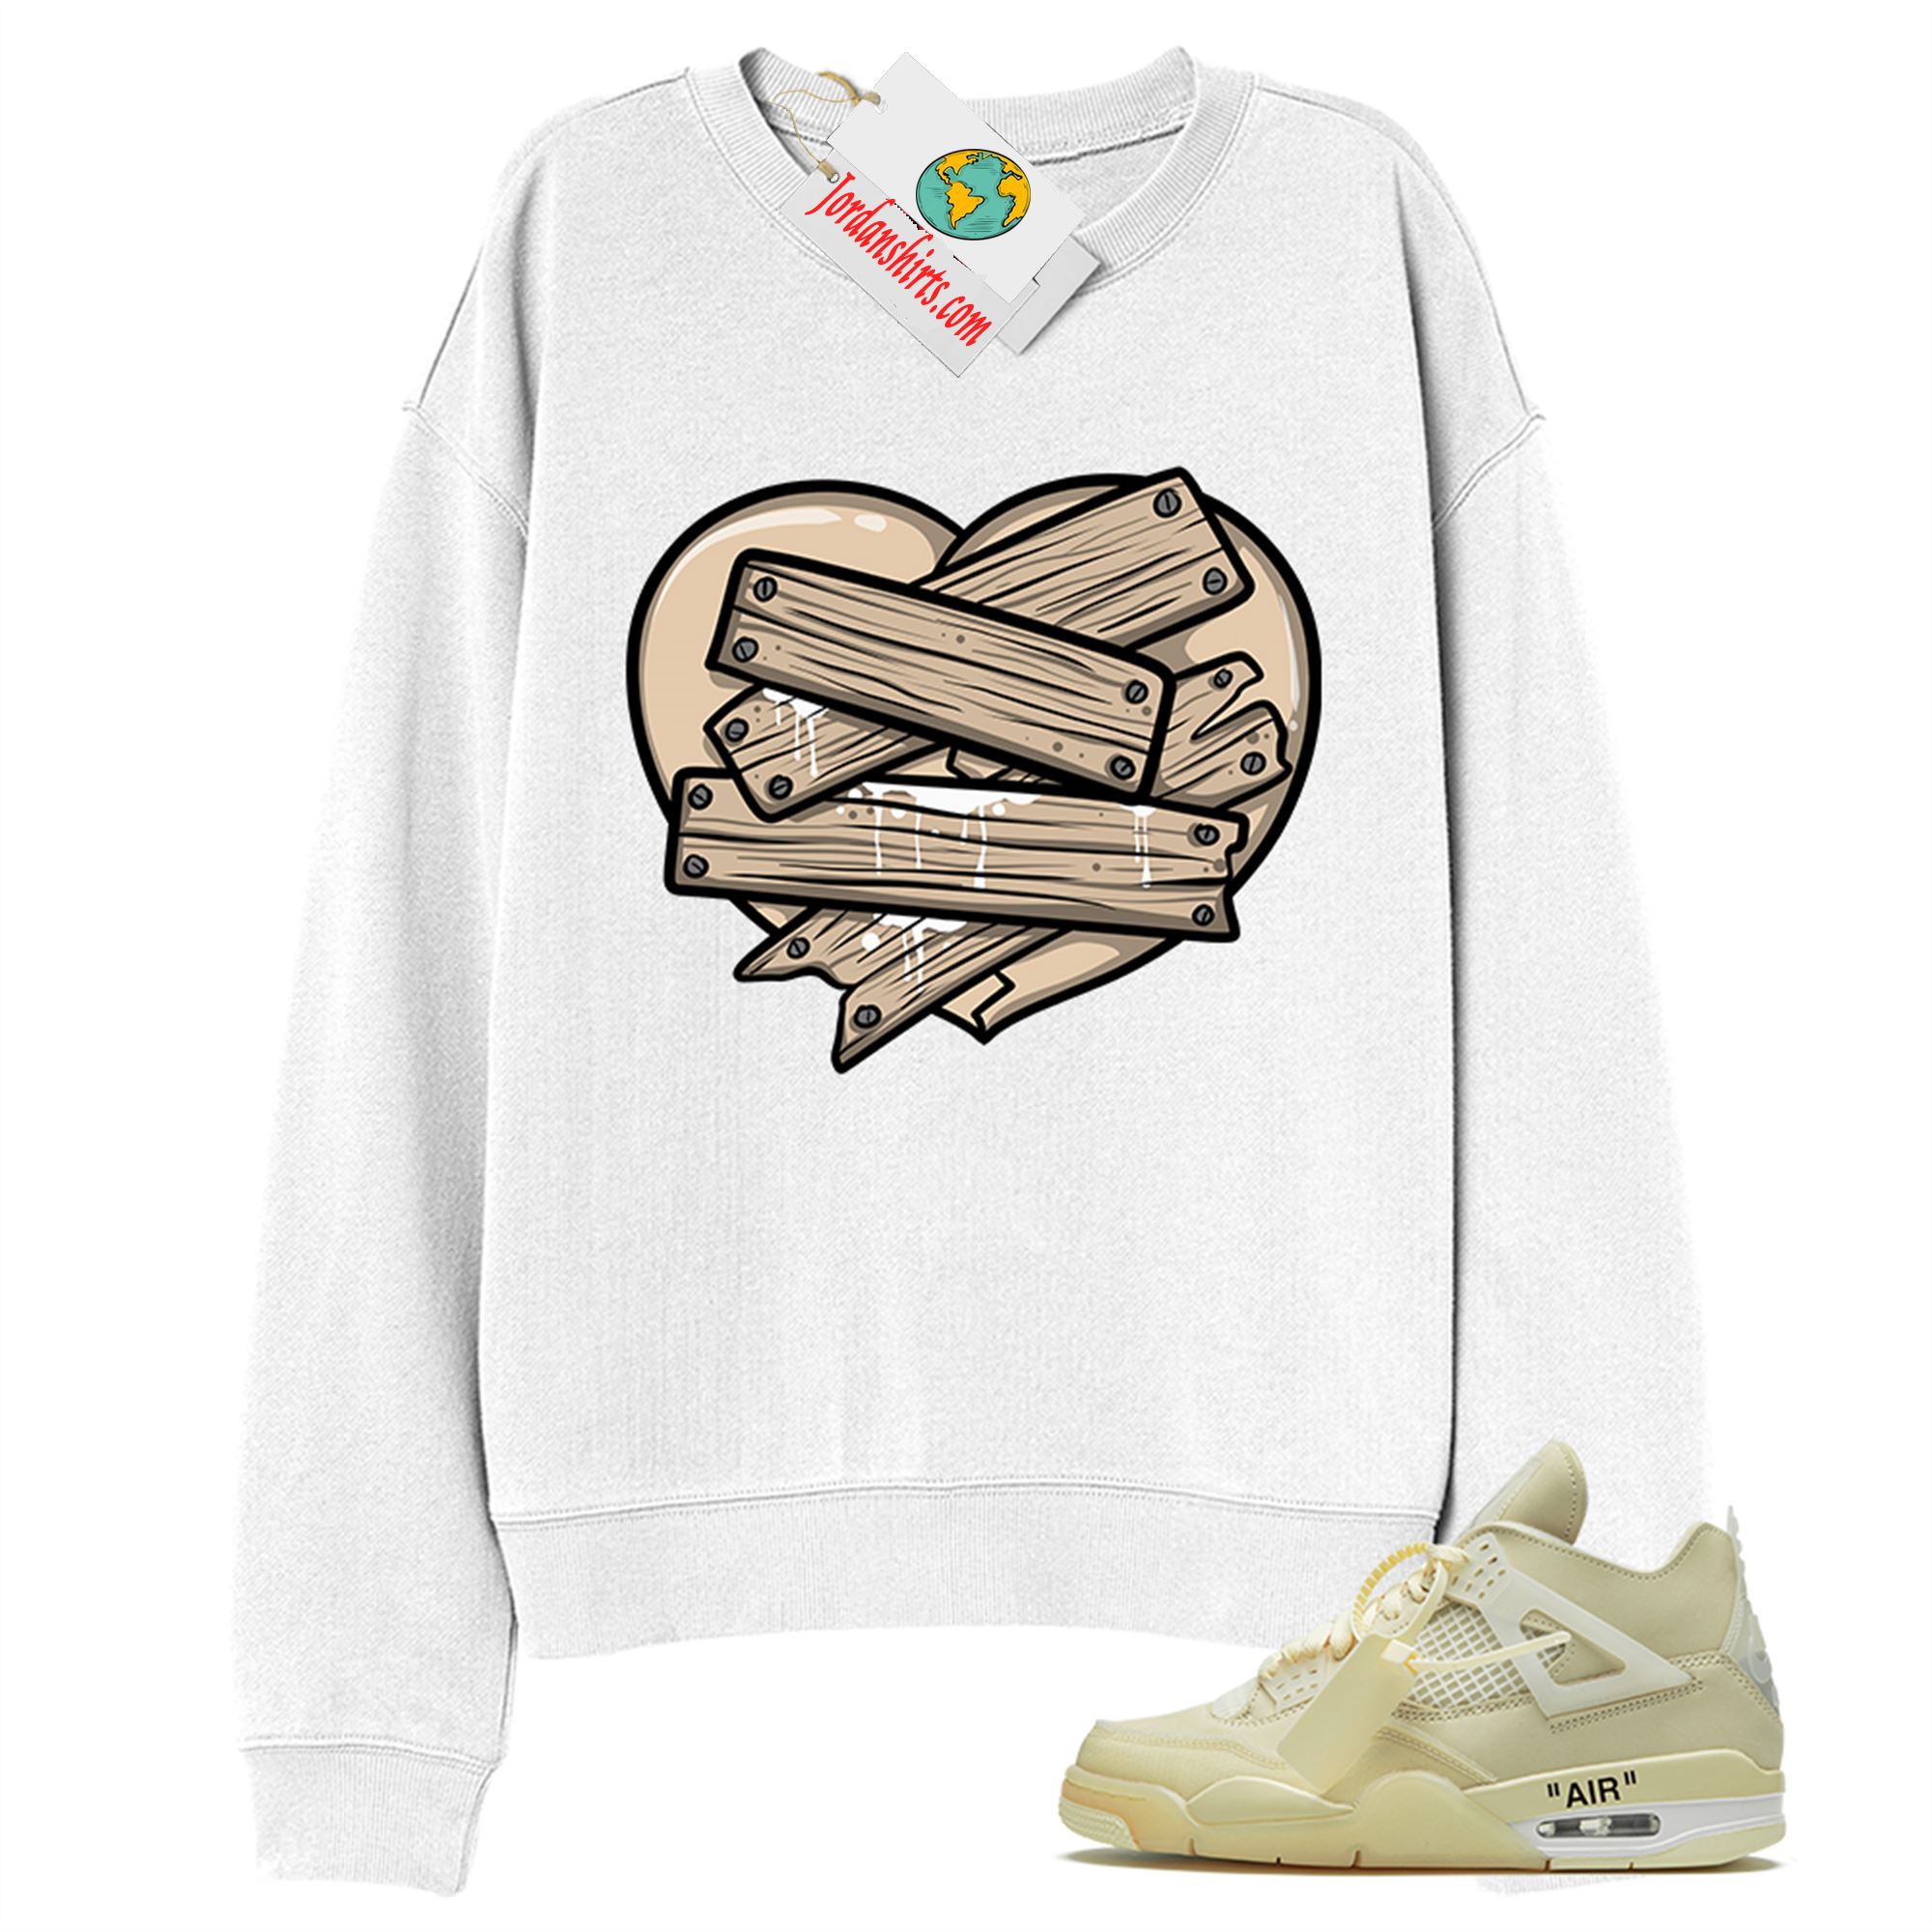 Jordan 4 Sweatshirt, Patch Love Broken Heart White Sweatshirt Air Jordan 4 Off-white 4s Full Size Up To 5xl